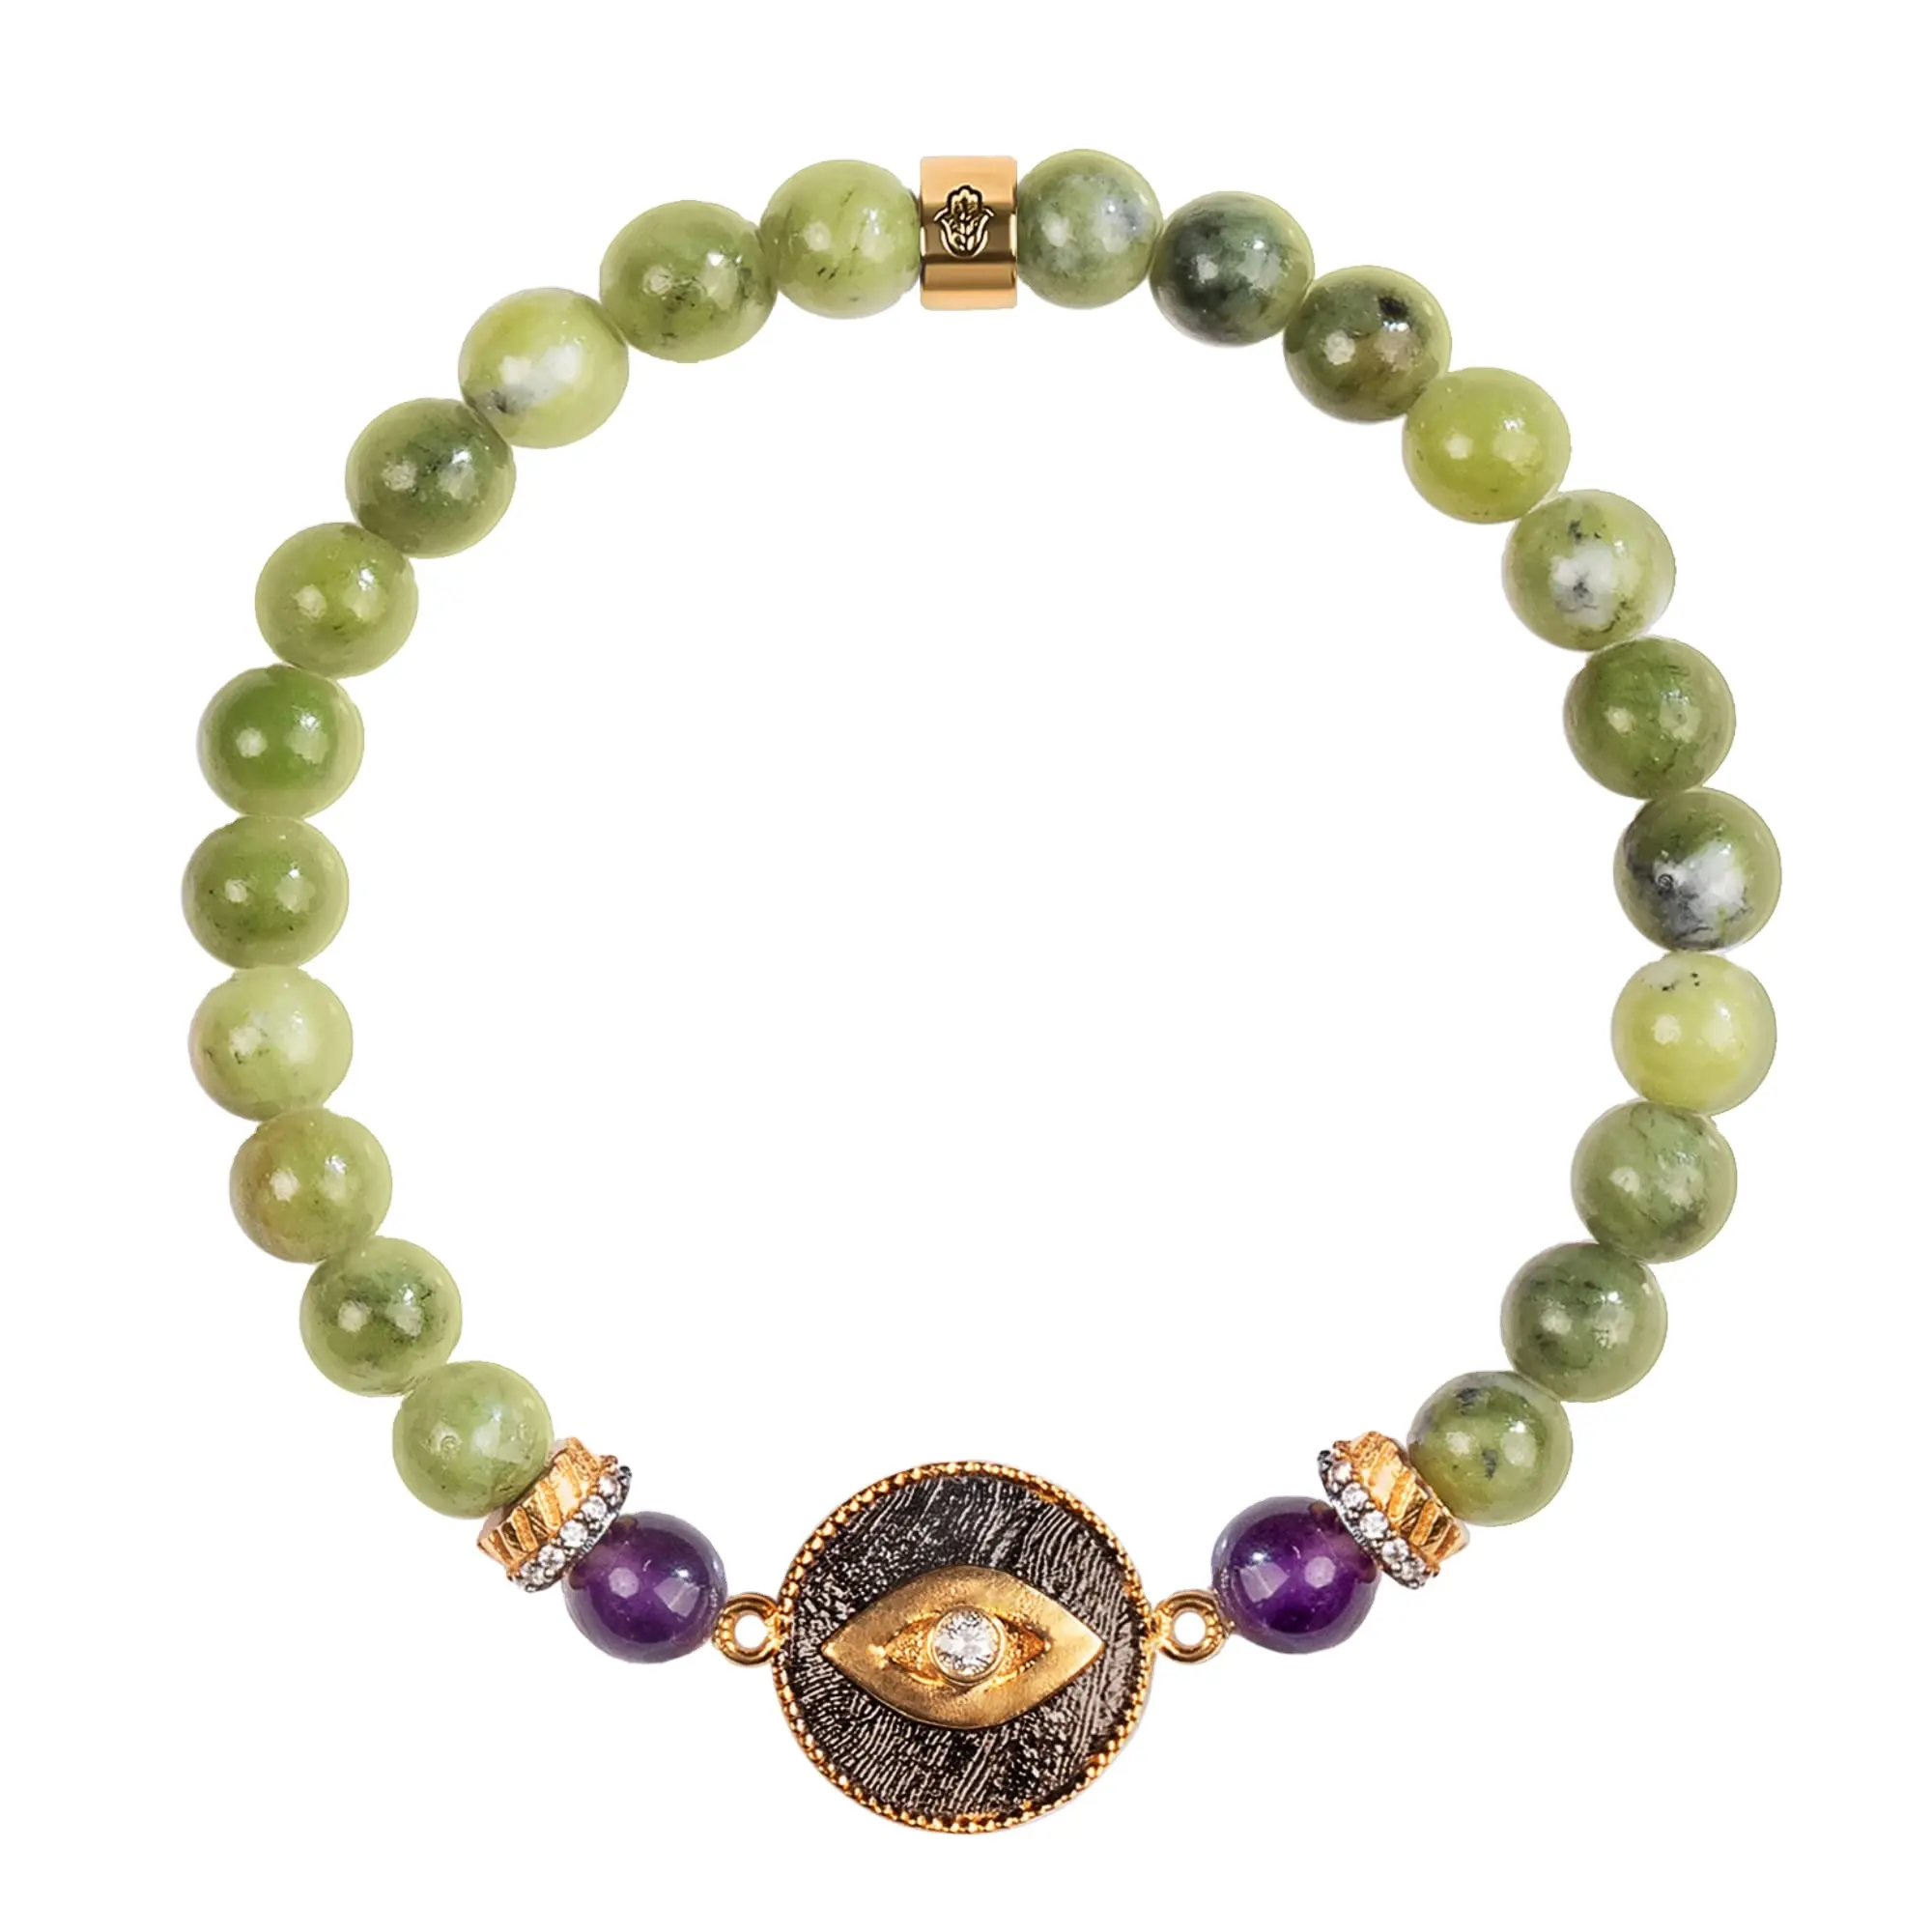 Damen-Echt-Jade-Stein 18K vergoldetes Messing-Augen-Perlen-Armband. 6,5 Zoll reißgedruckt. Schutzarmband, geschenkbereit für H